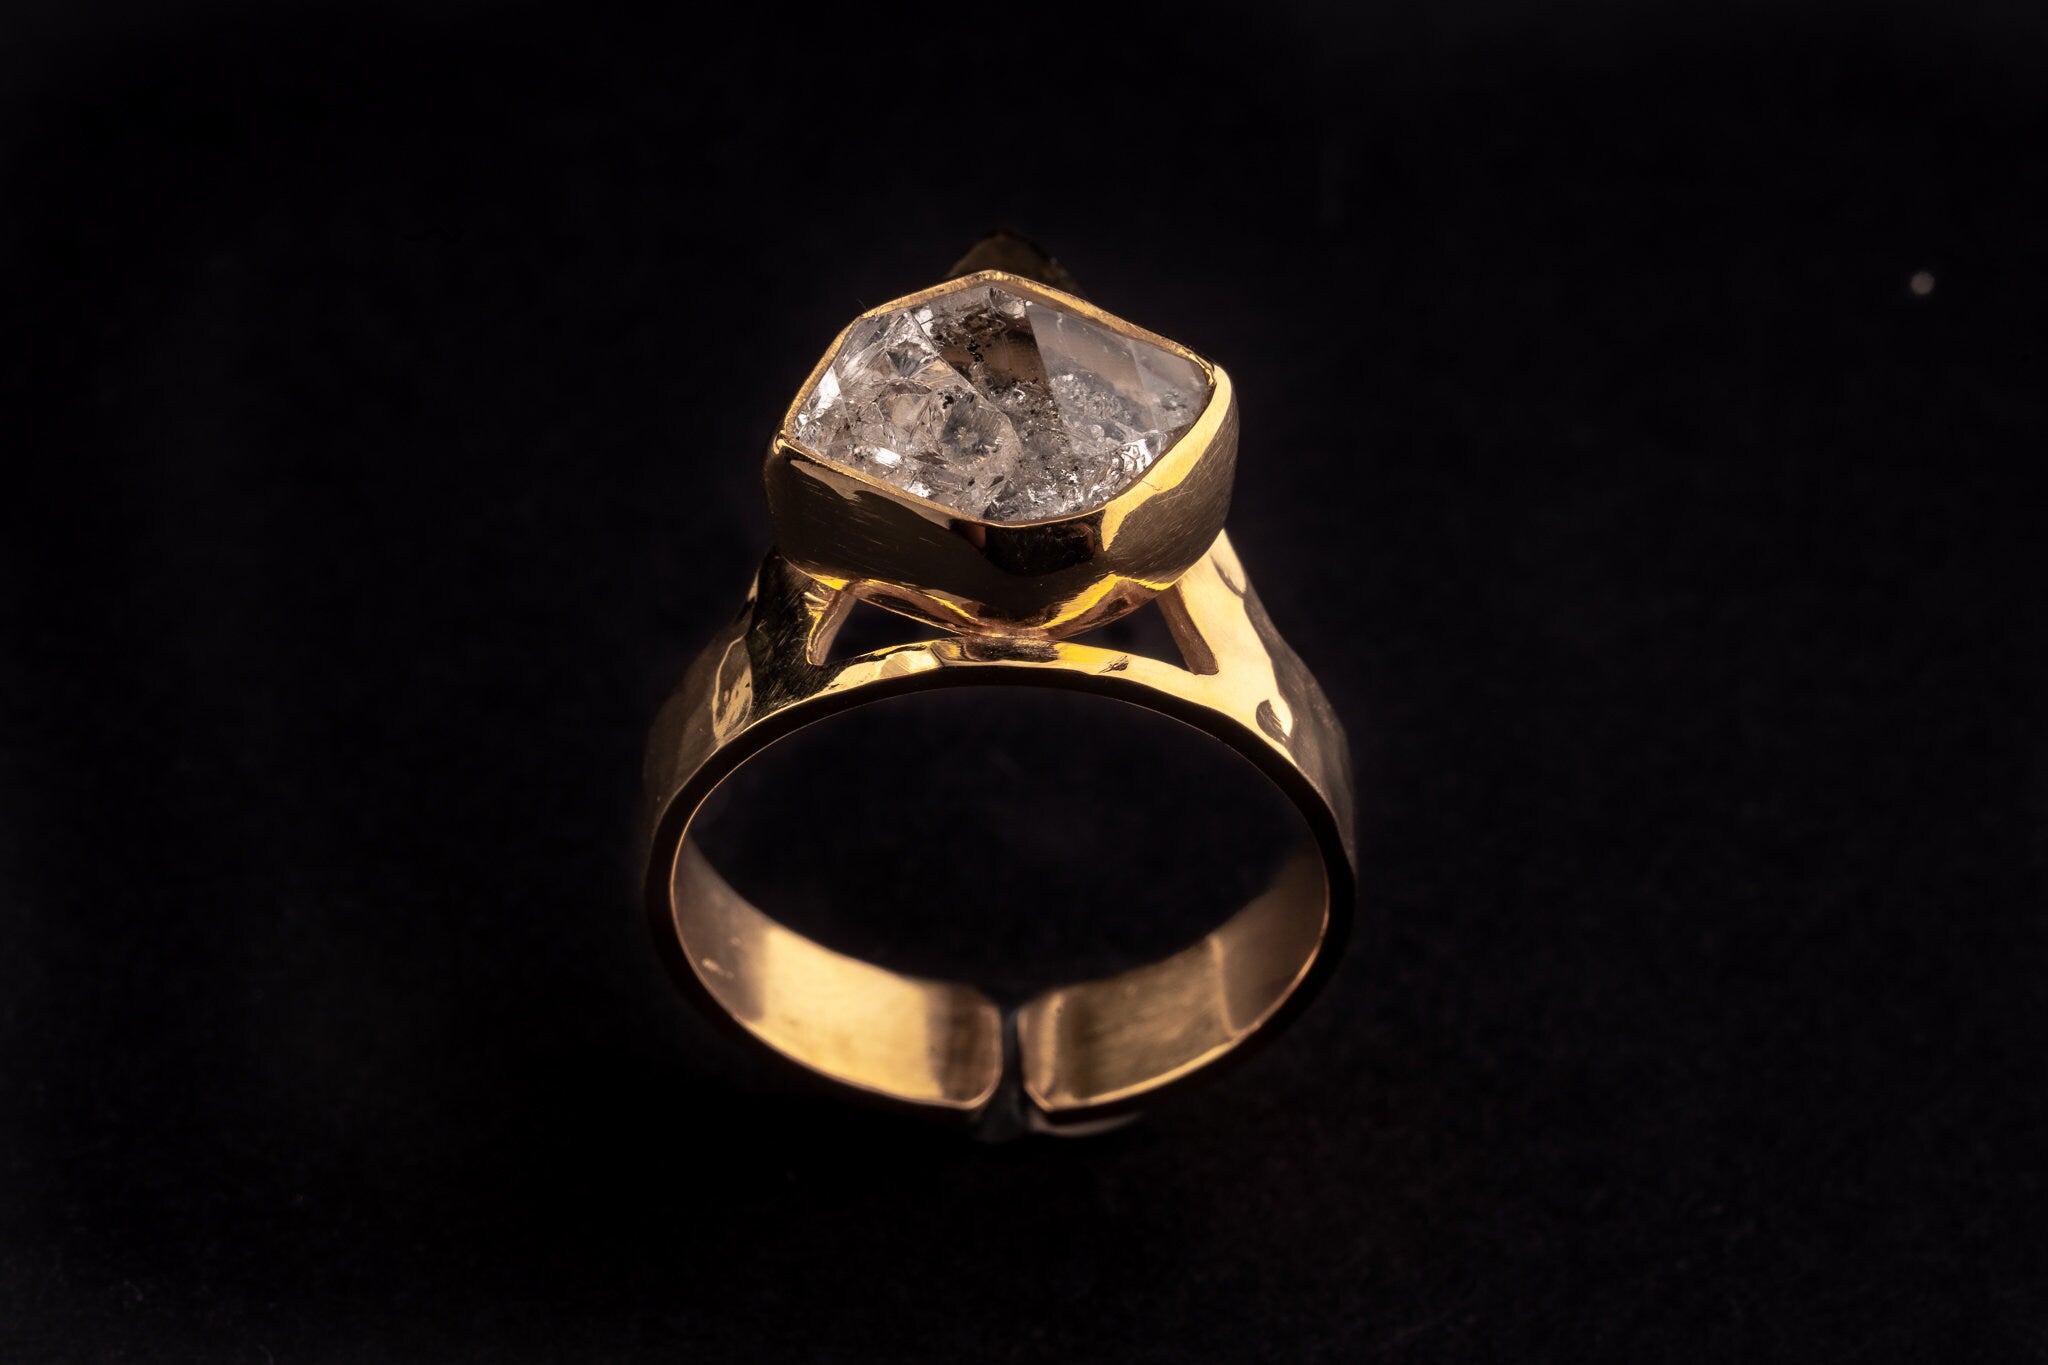 Herkimer Diamond Quartz - Hammered & Gold Plated Finish - 925 Sterling Silver - Adjustable 5-11 US Open Ring